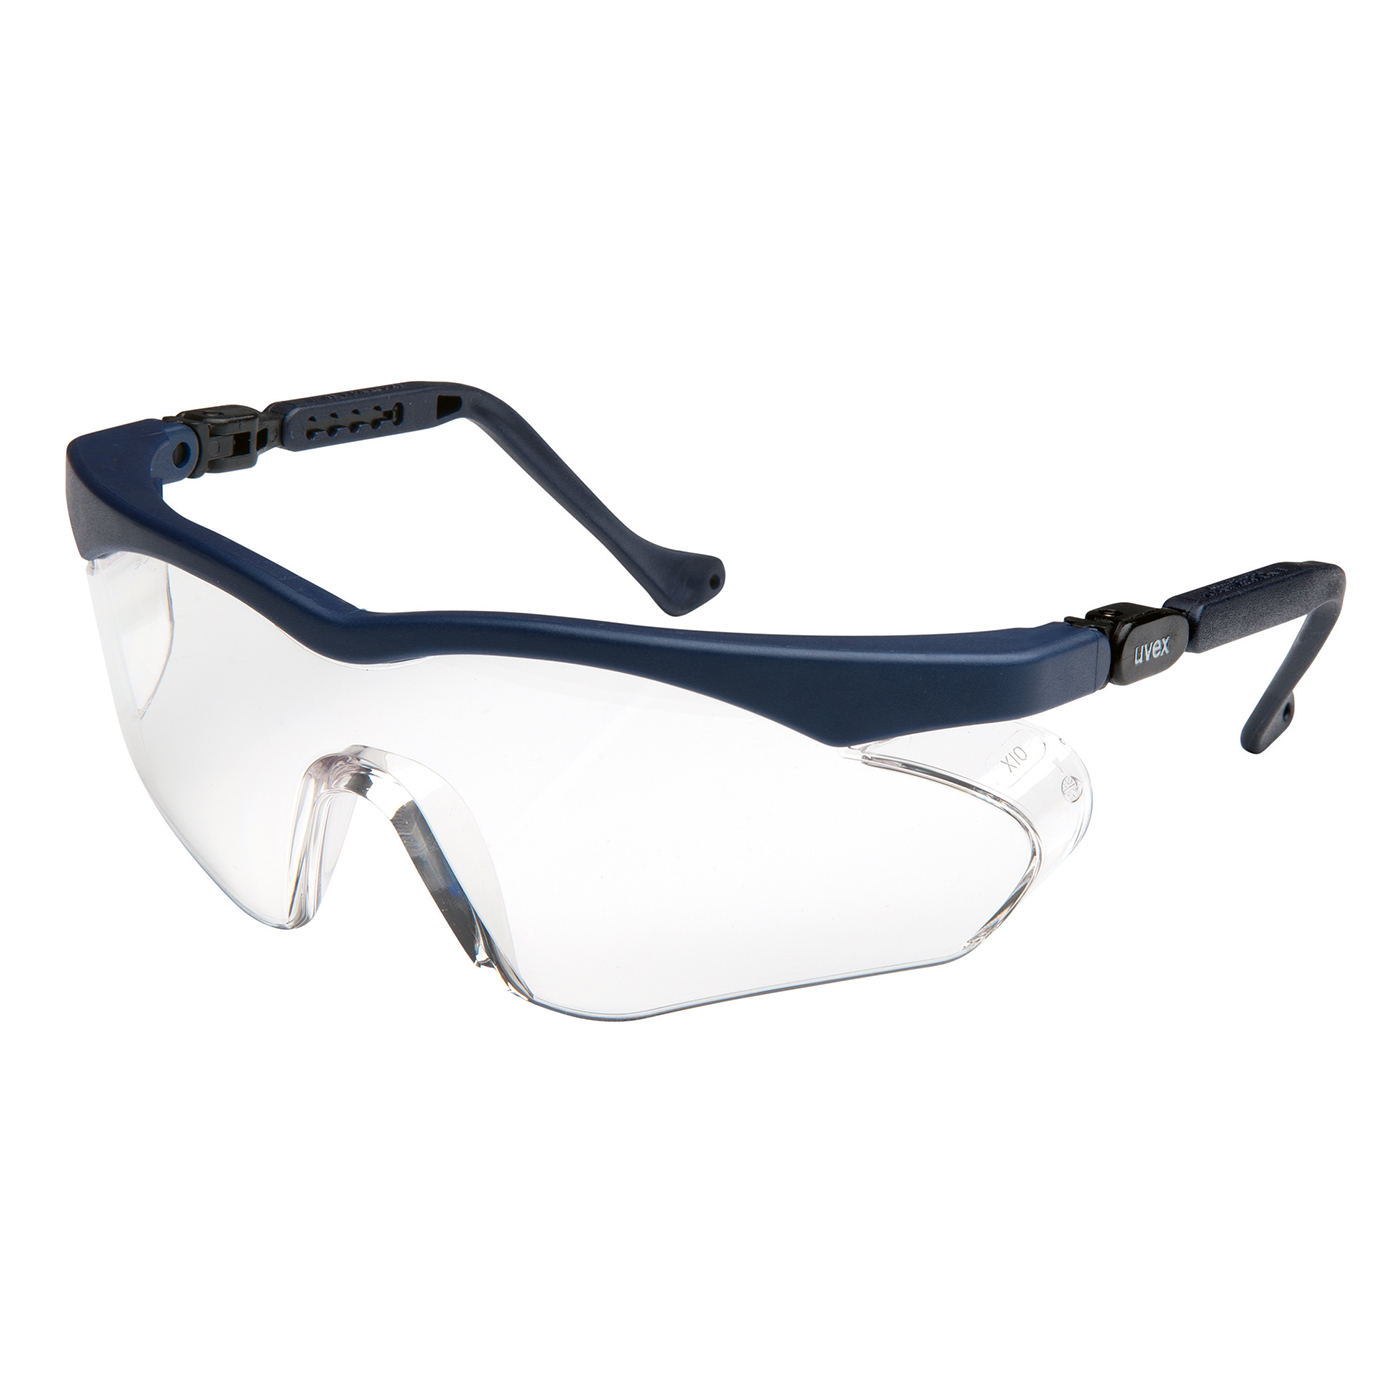 iSpec Flexi Fit II Protective Goggles, Lens Transp., Blue - 1 piece